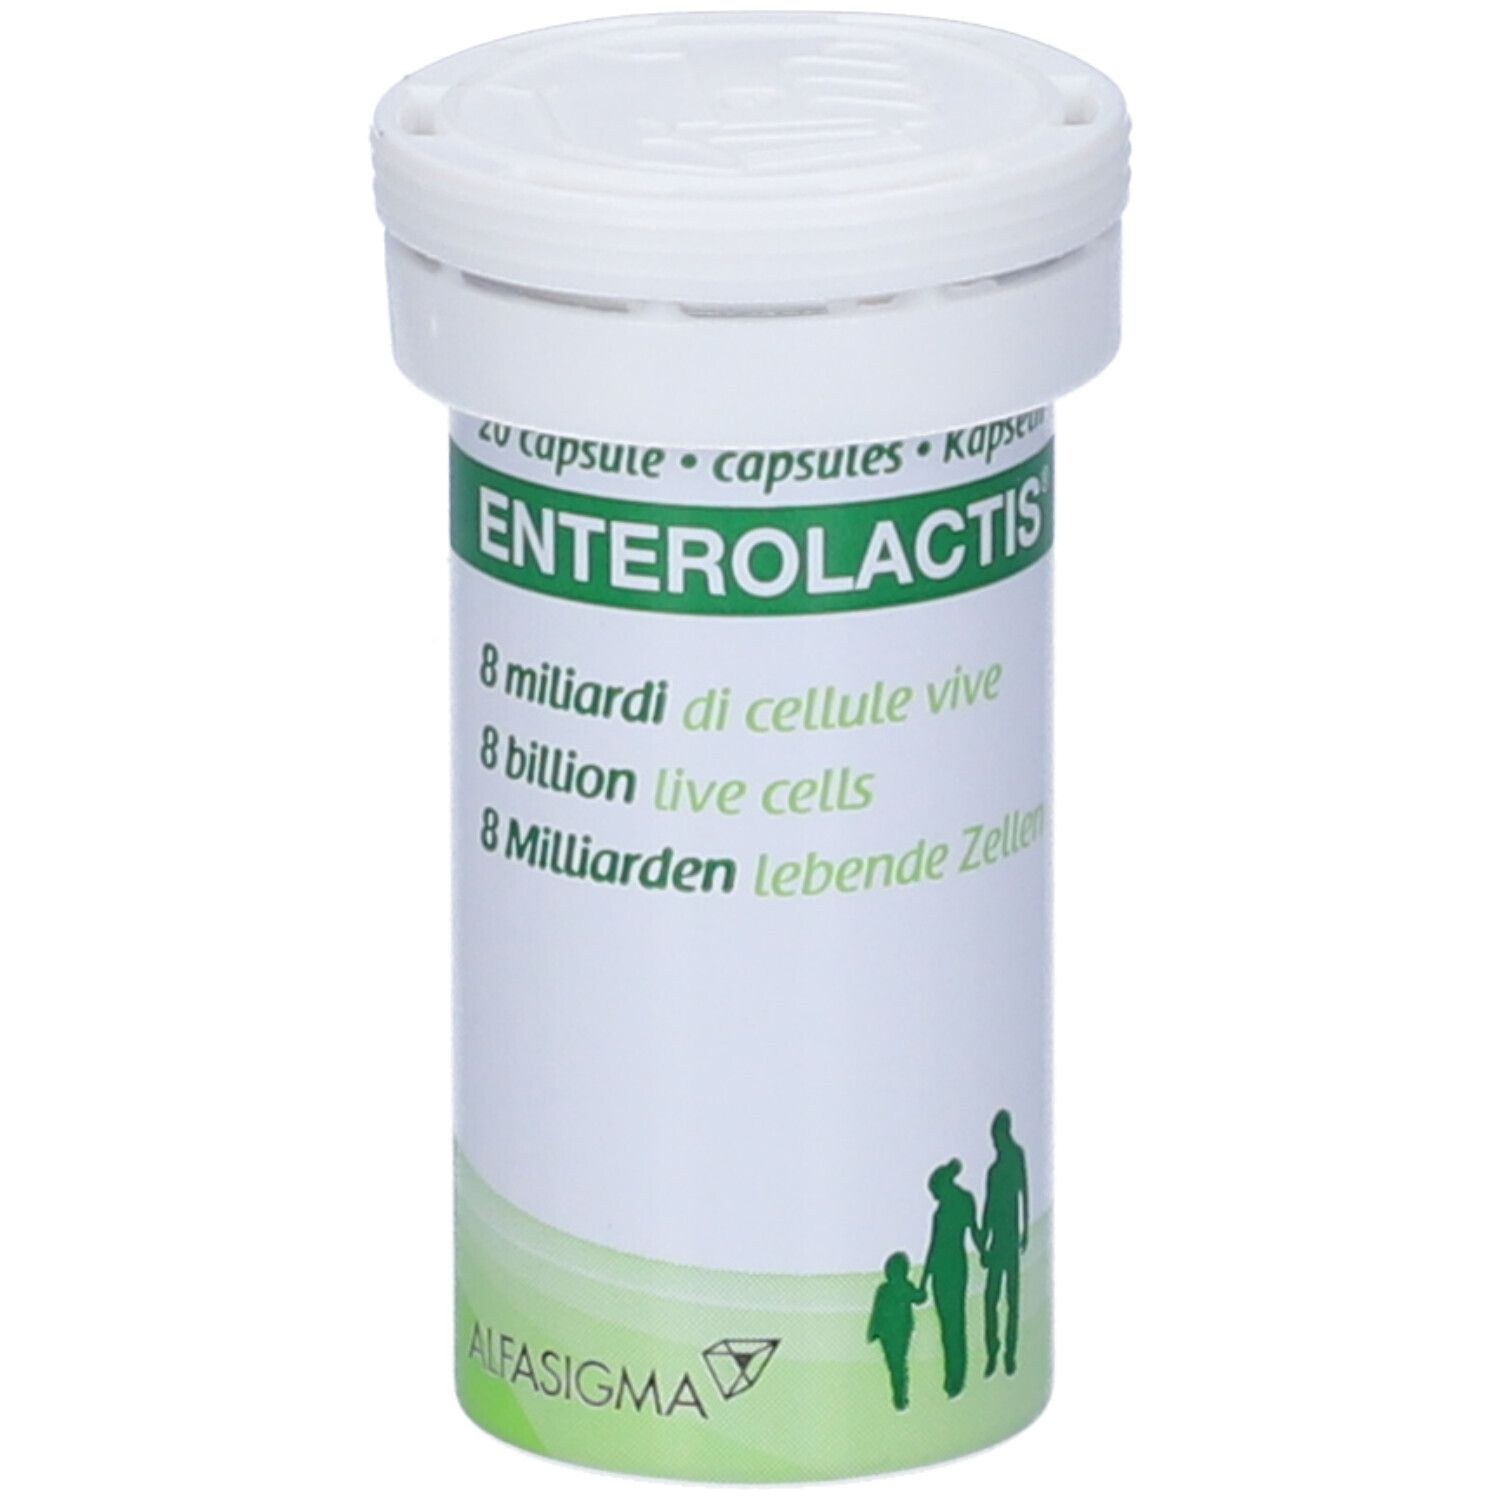 Enterolactis® Capsule